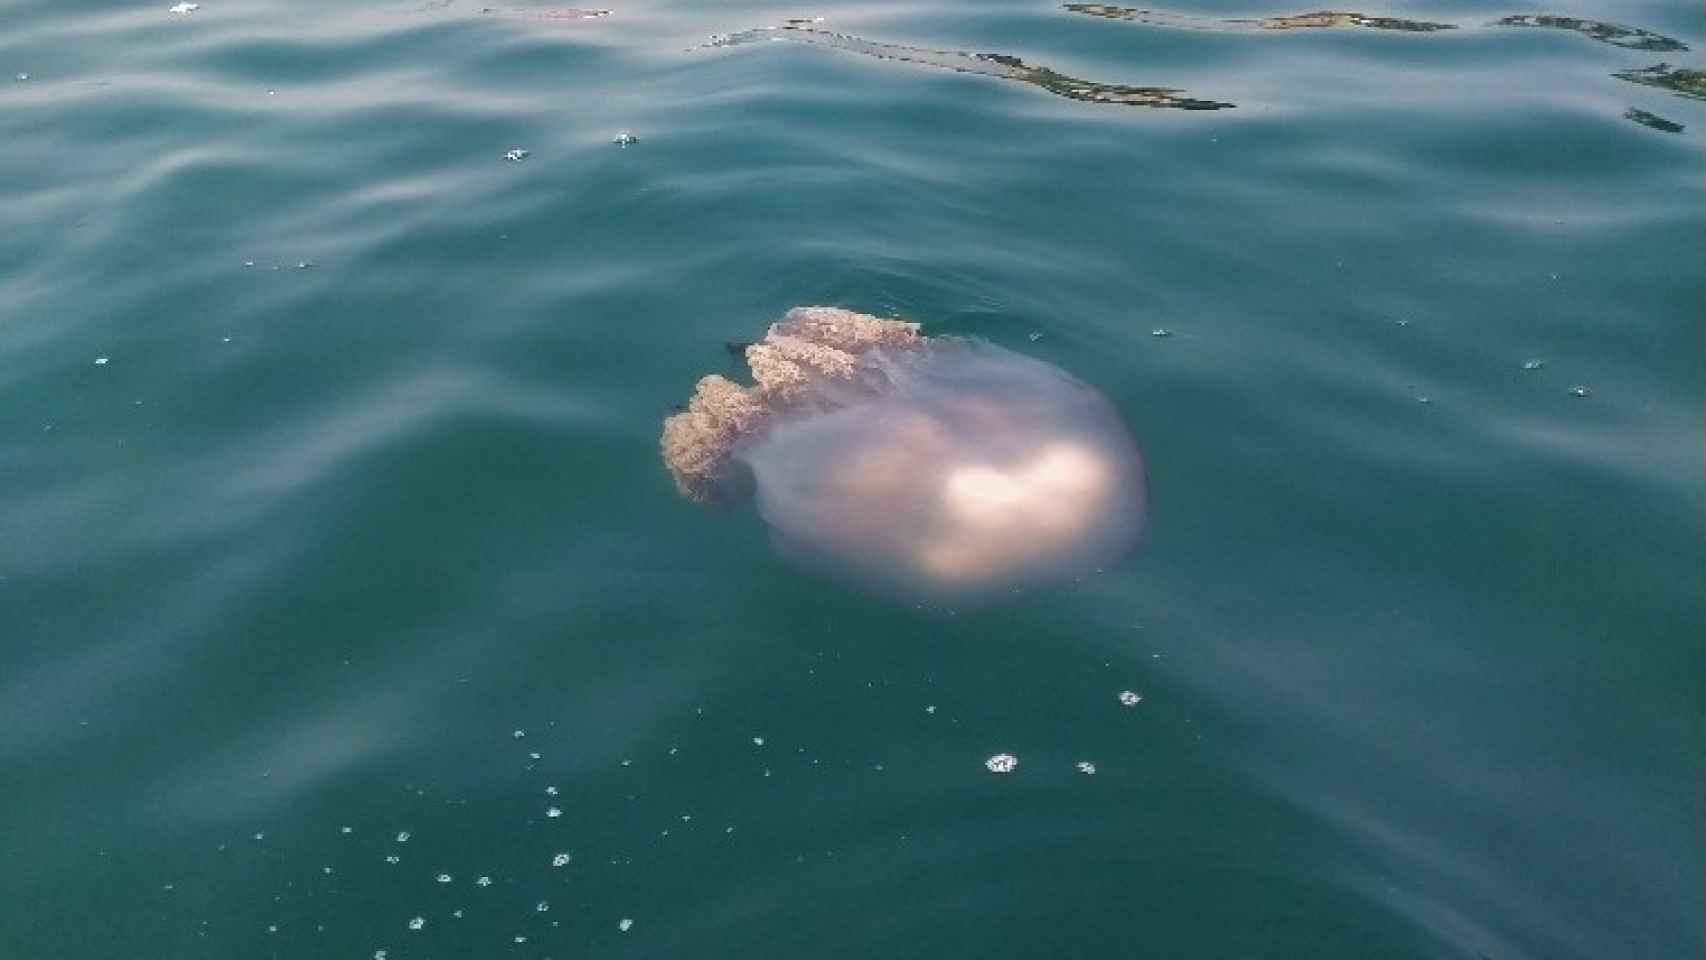 Llega la medusa más grande del Mediterráneo a la playa de Tarifa.